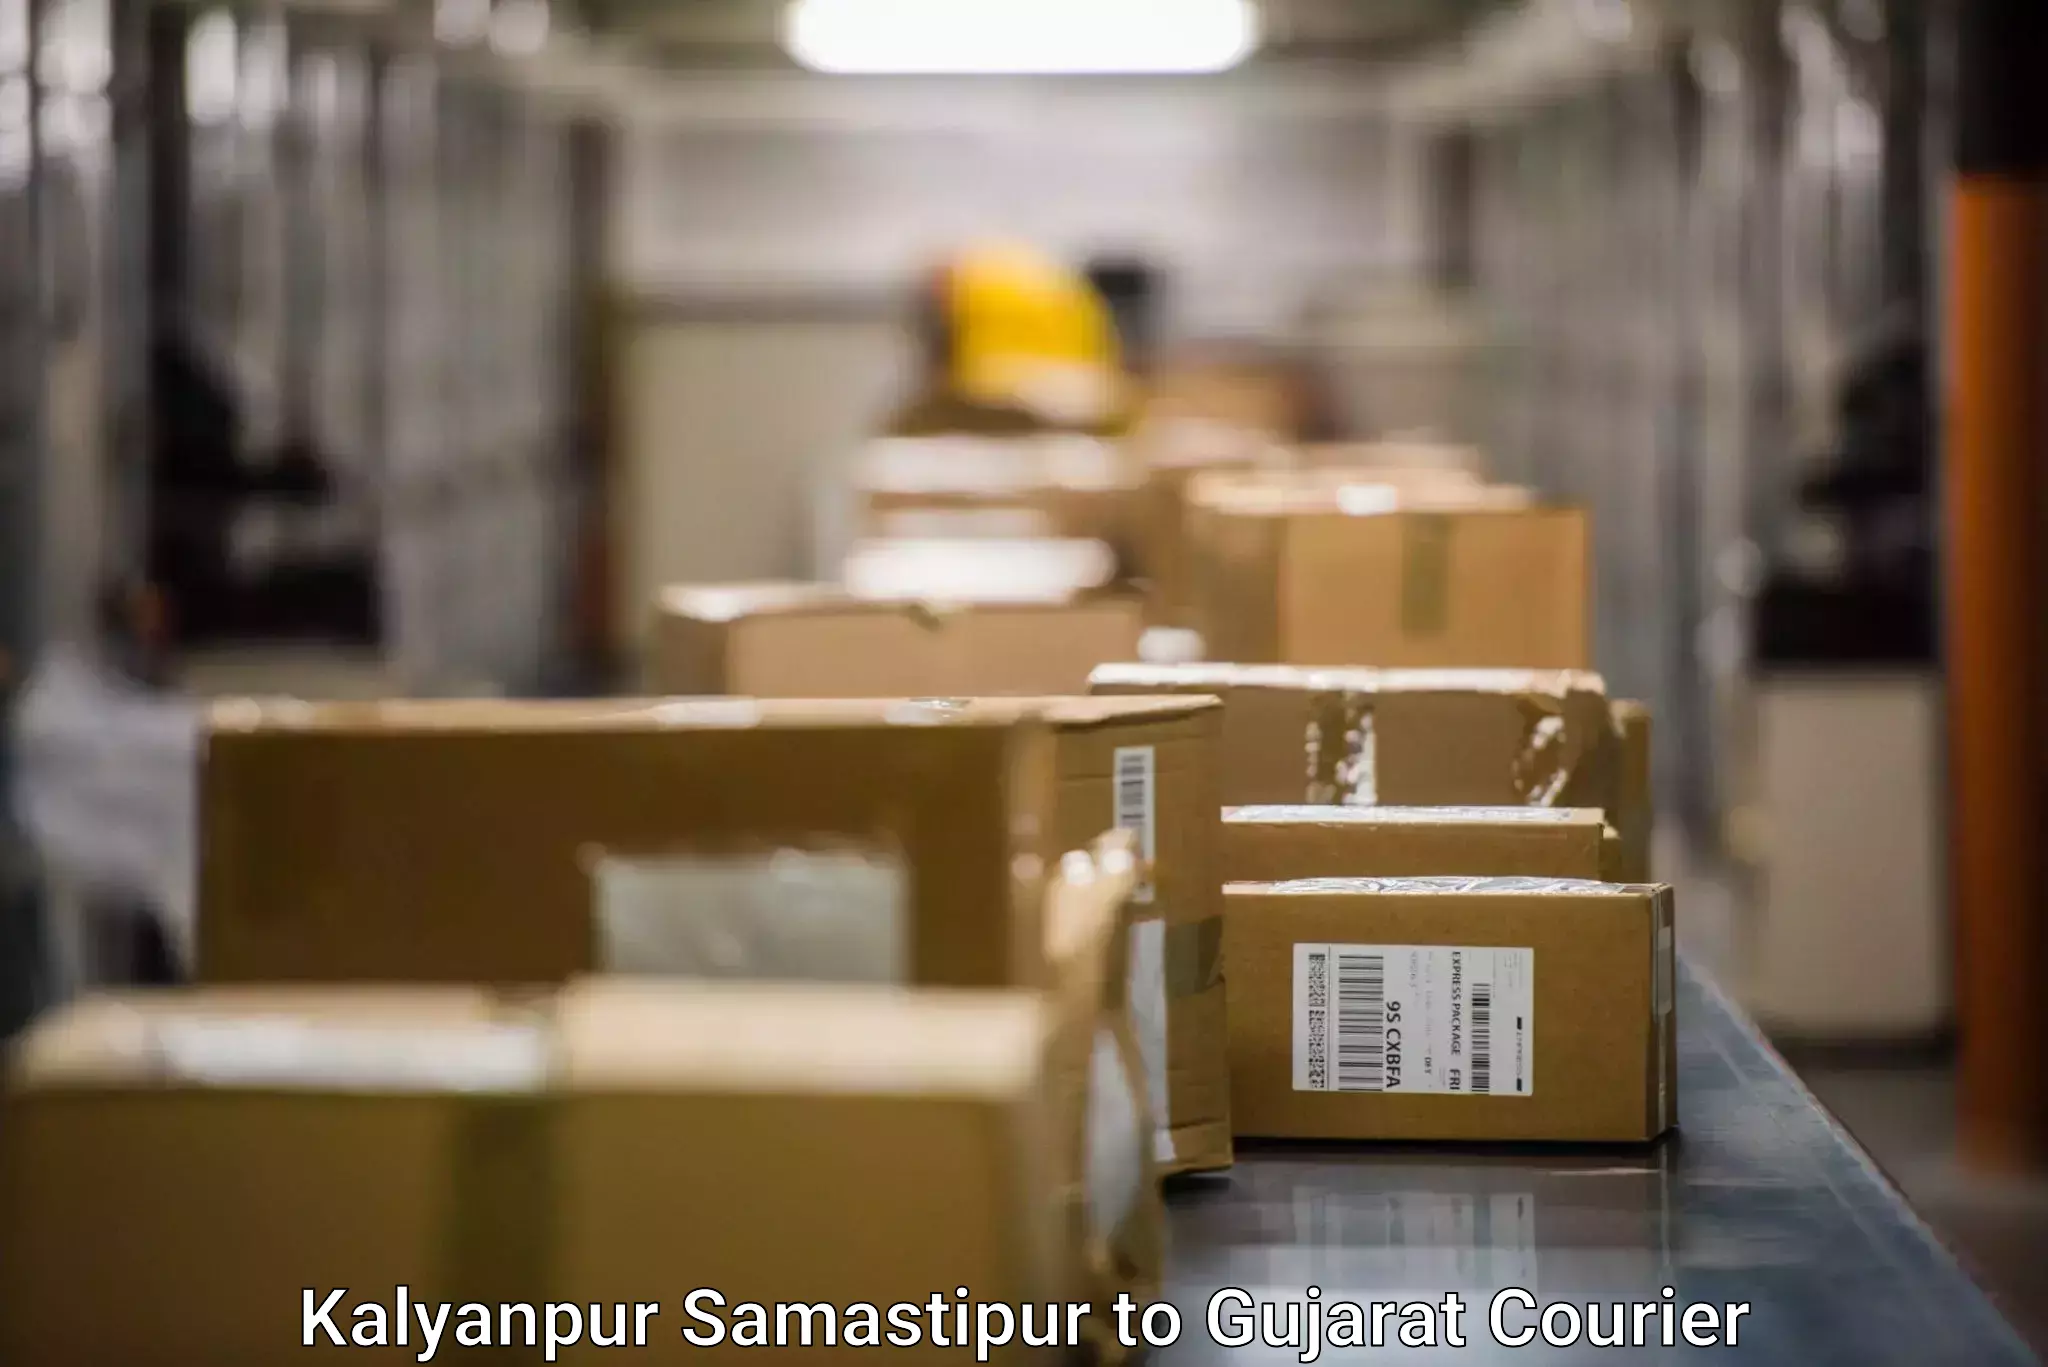 Package delivery network Kalyanpur Samastipur to Navrangpura